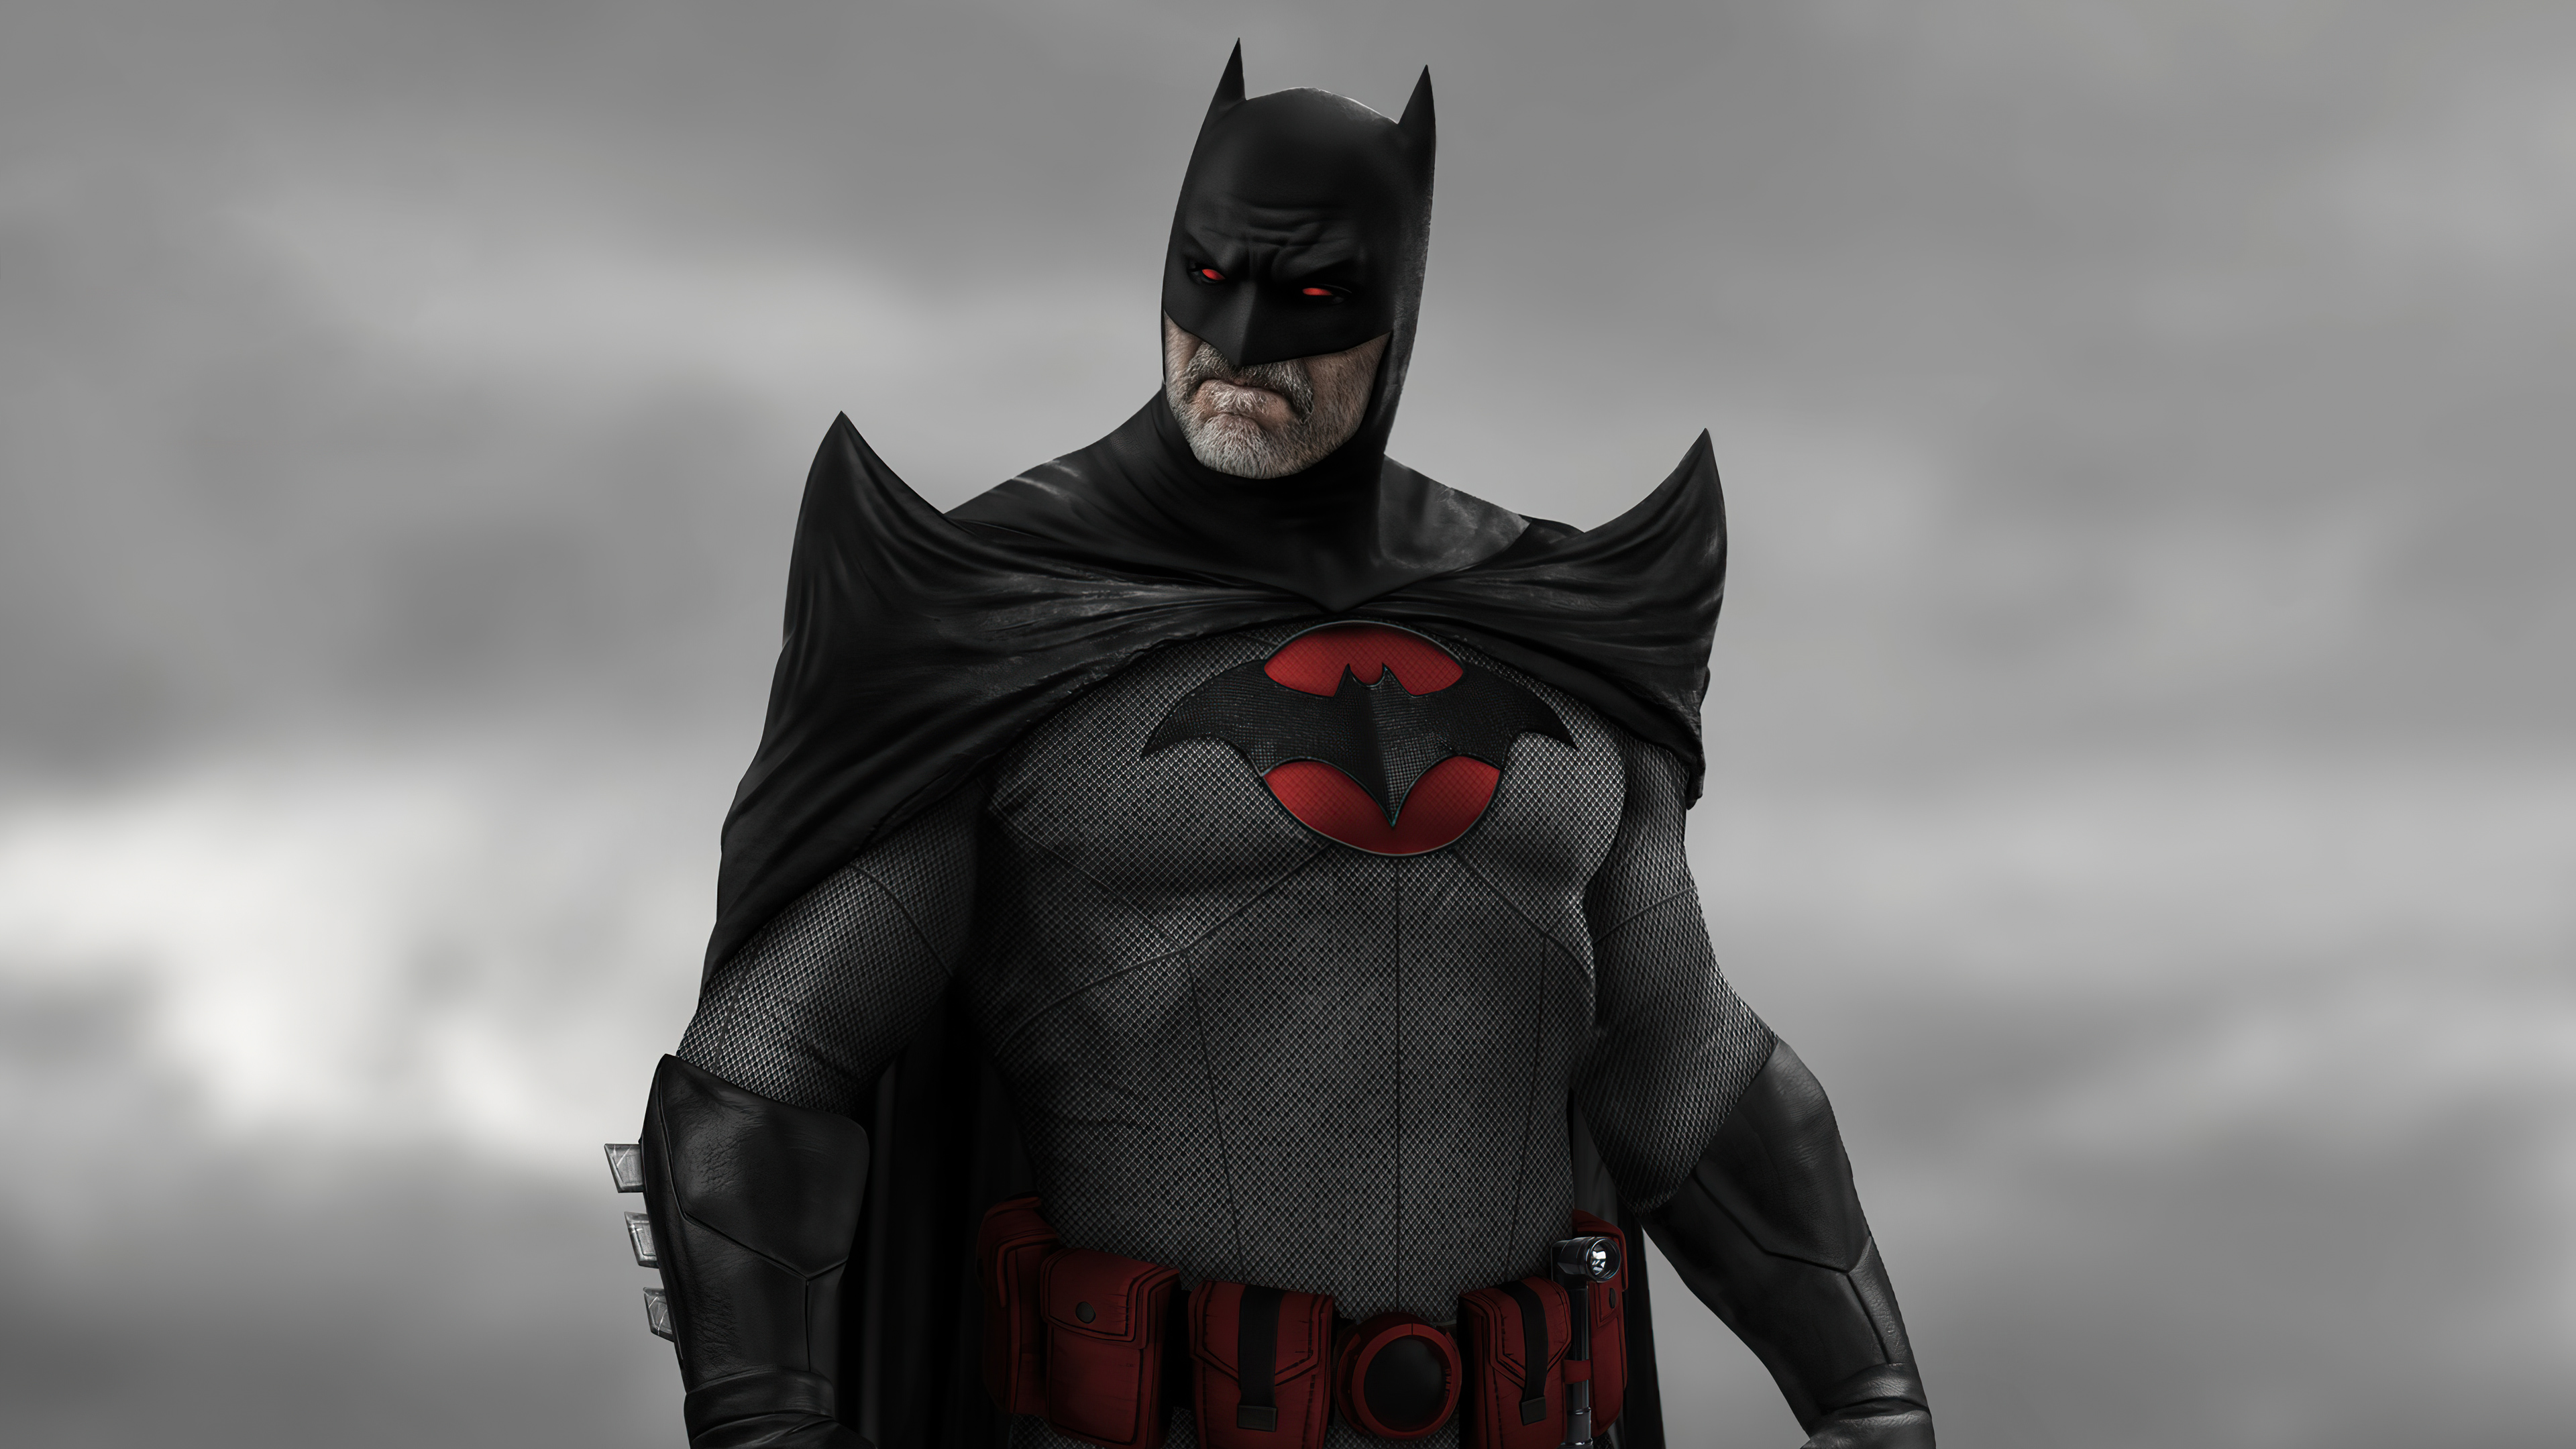 DCEU Flashpoint Batman Concept Art, HD Superheroes, 4k Wallpaper, Image, Background, Photo and Picture